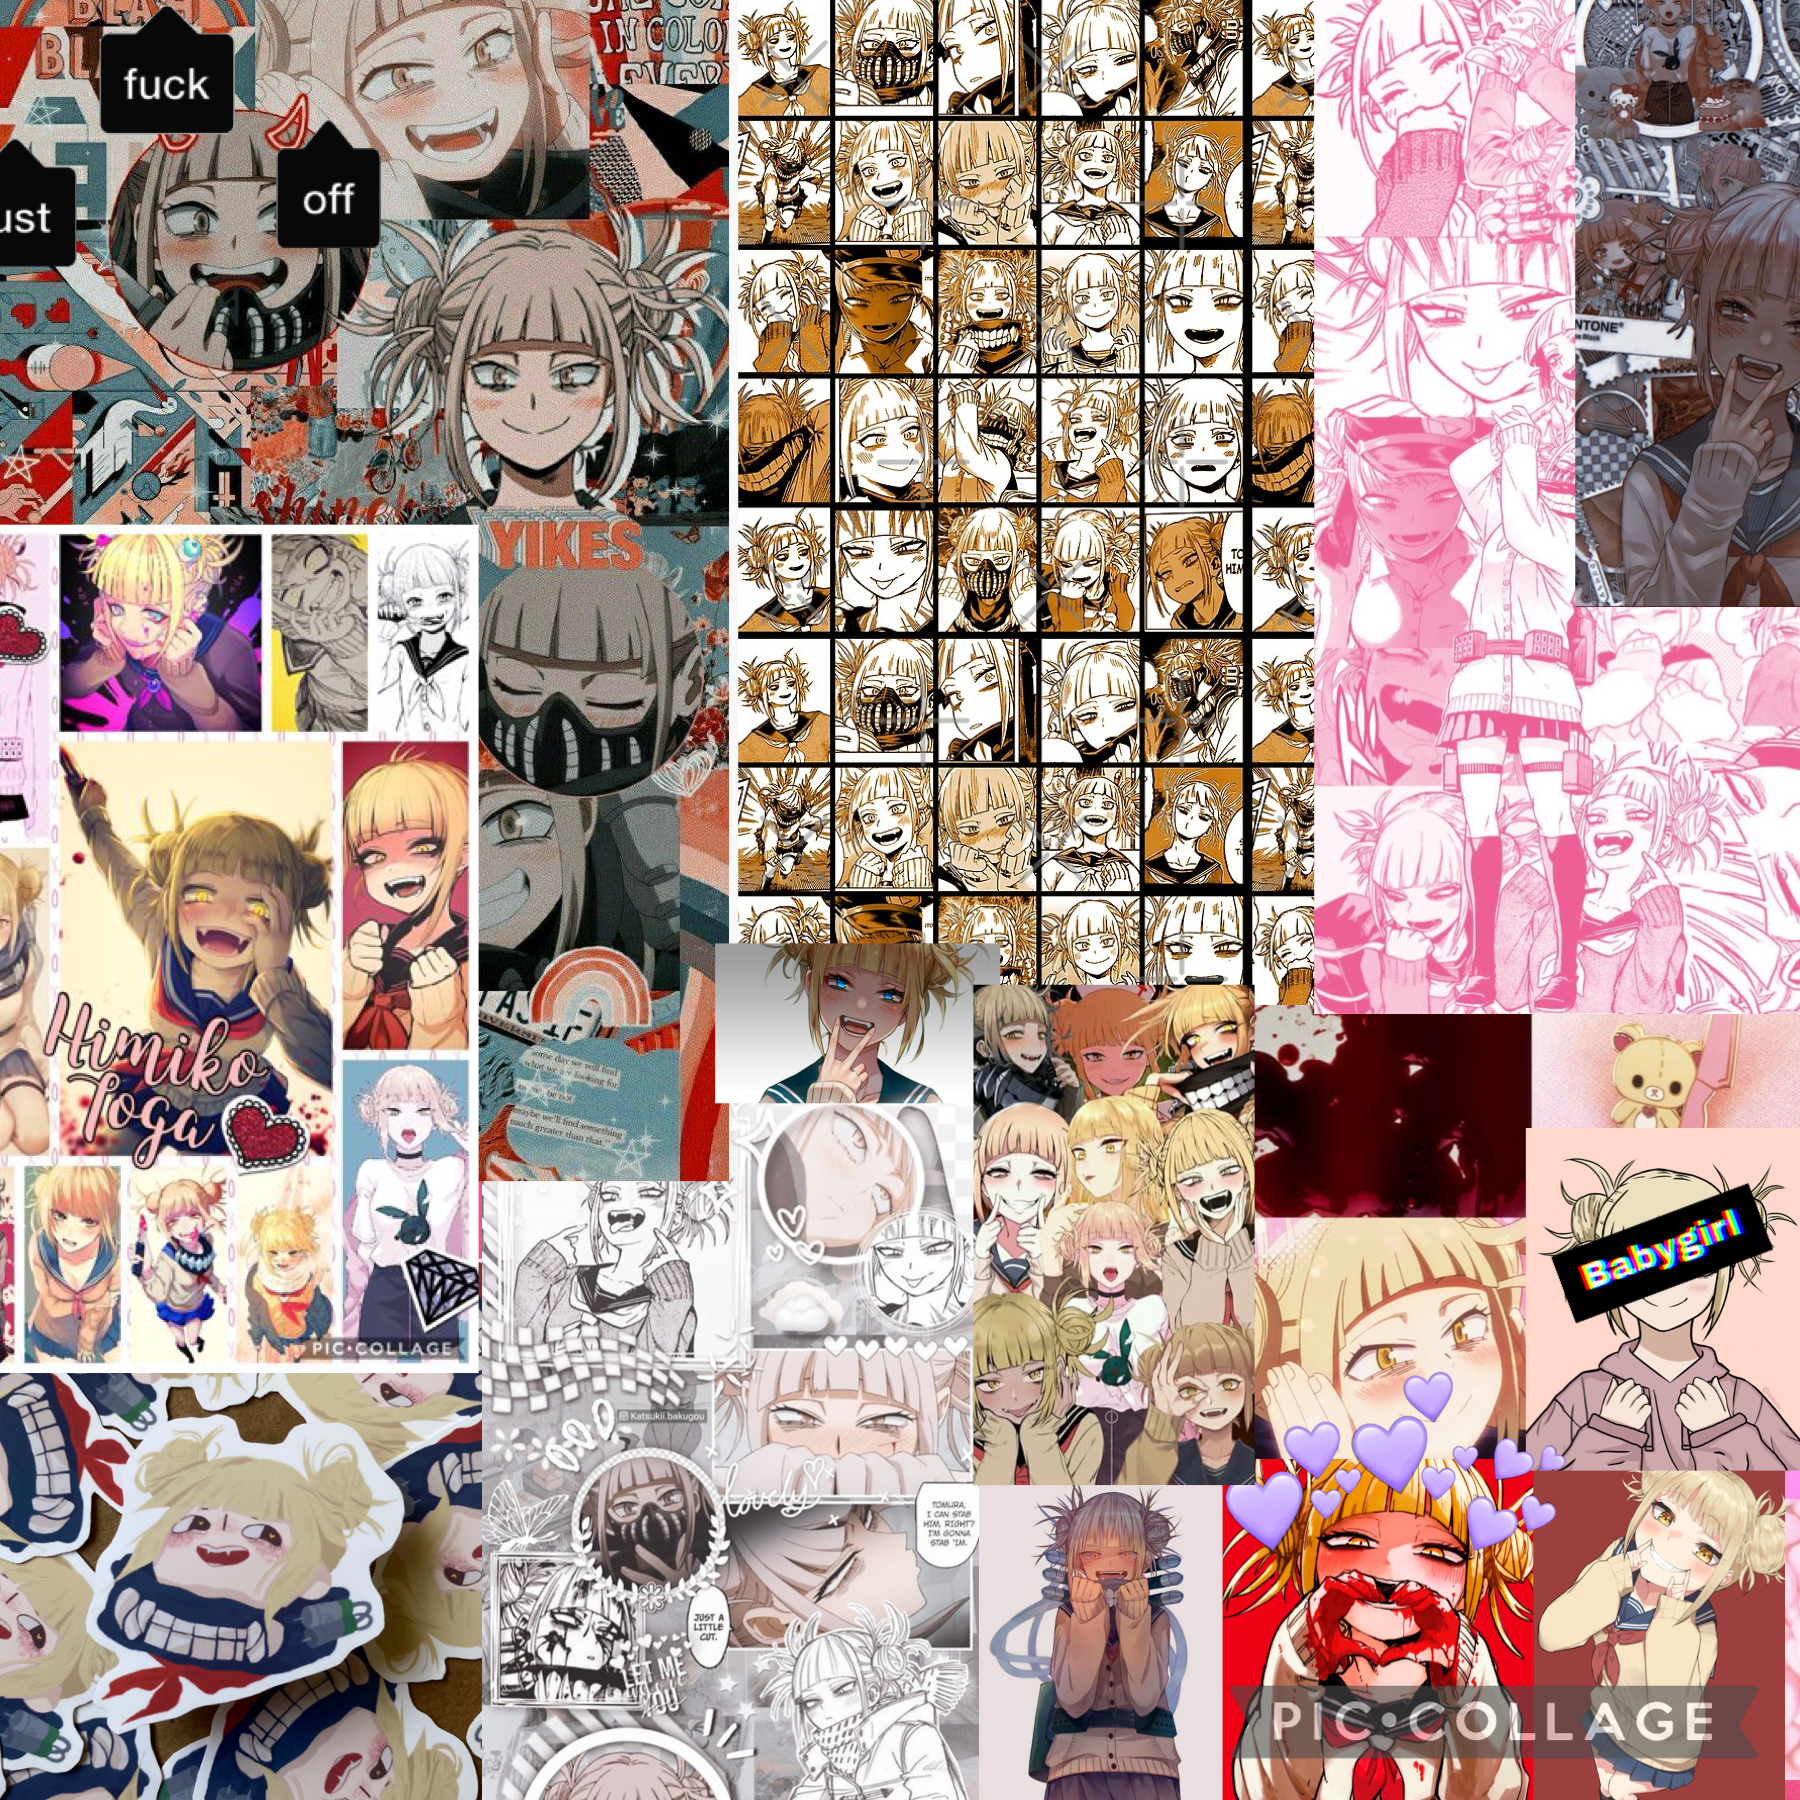 Himiko collage